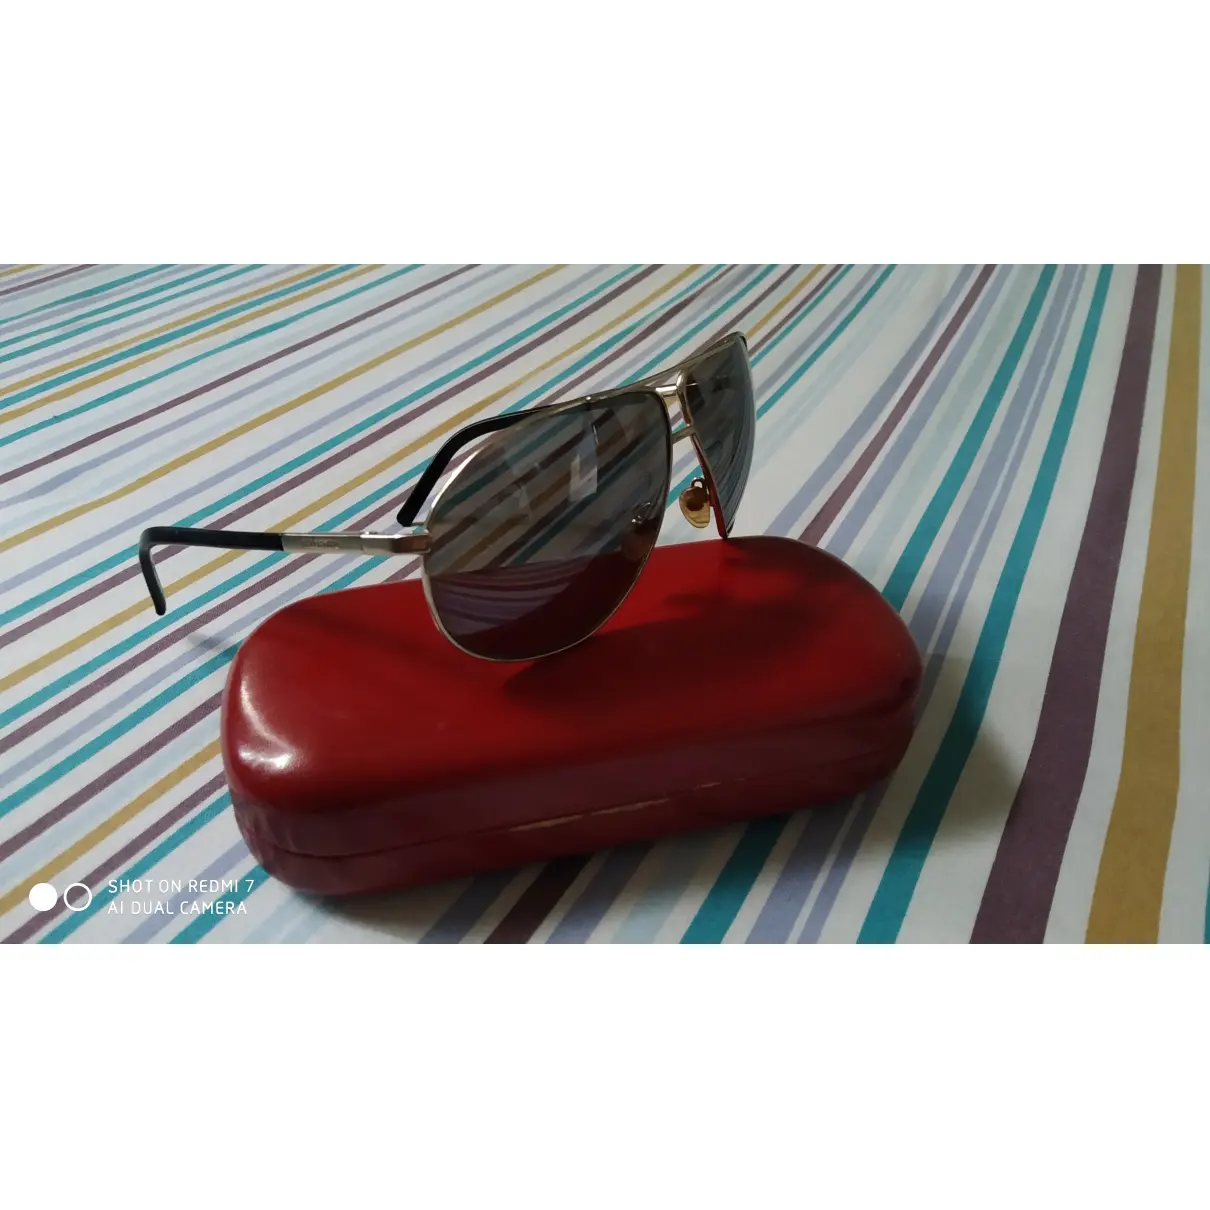 Buy Valentino Garavani Sunglasses online - Vintage